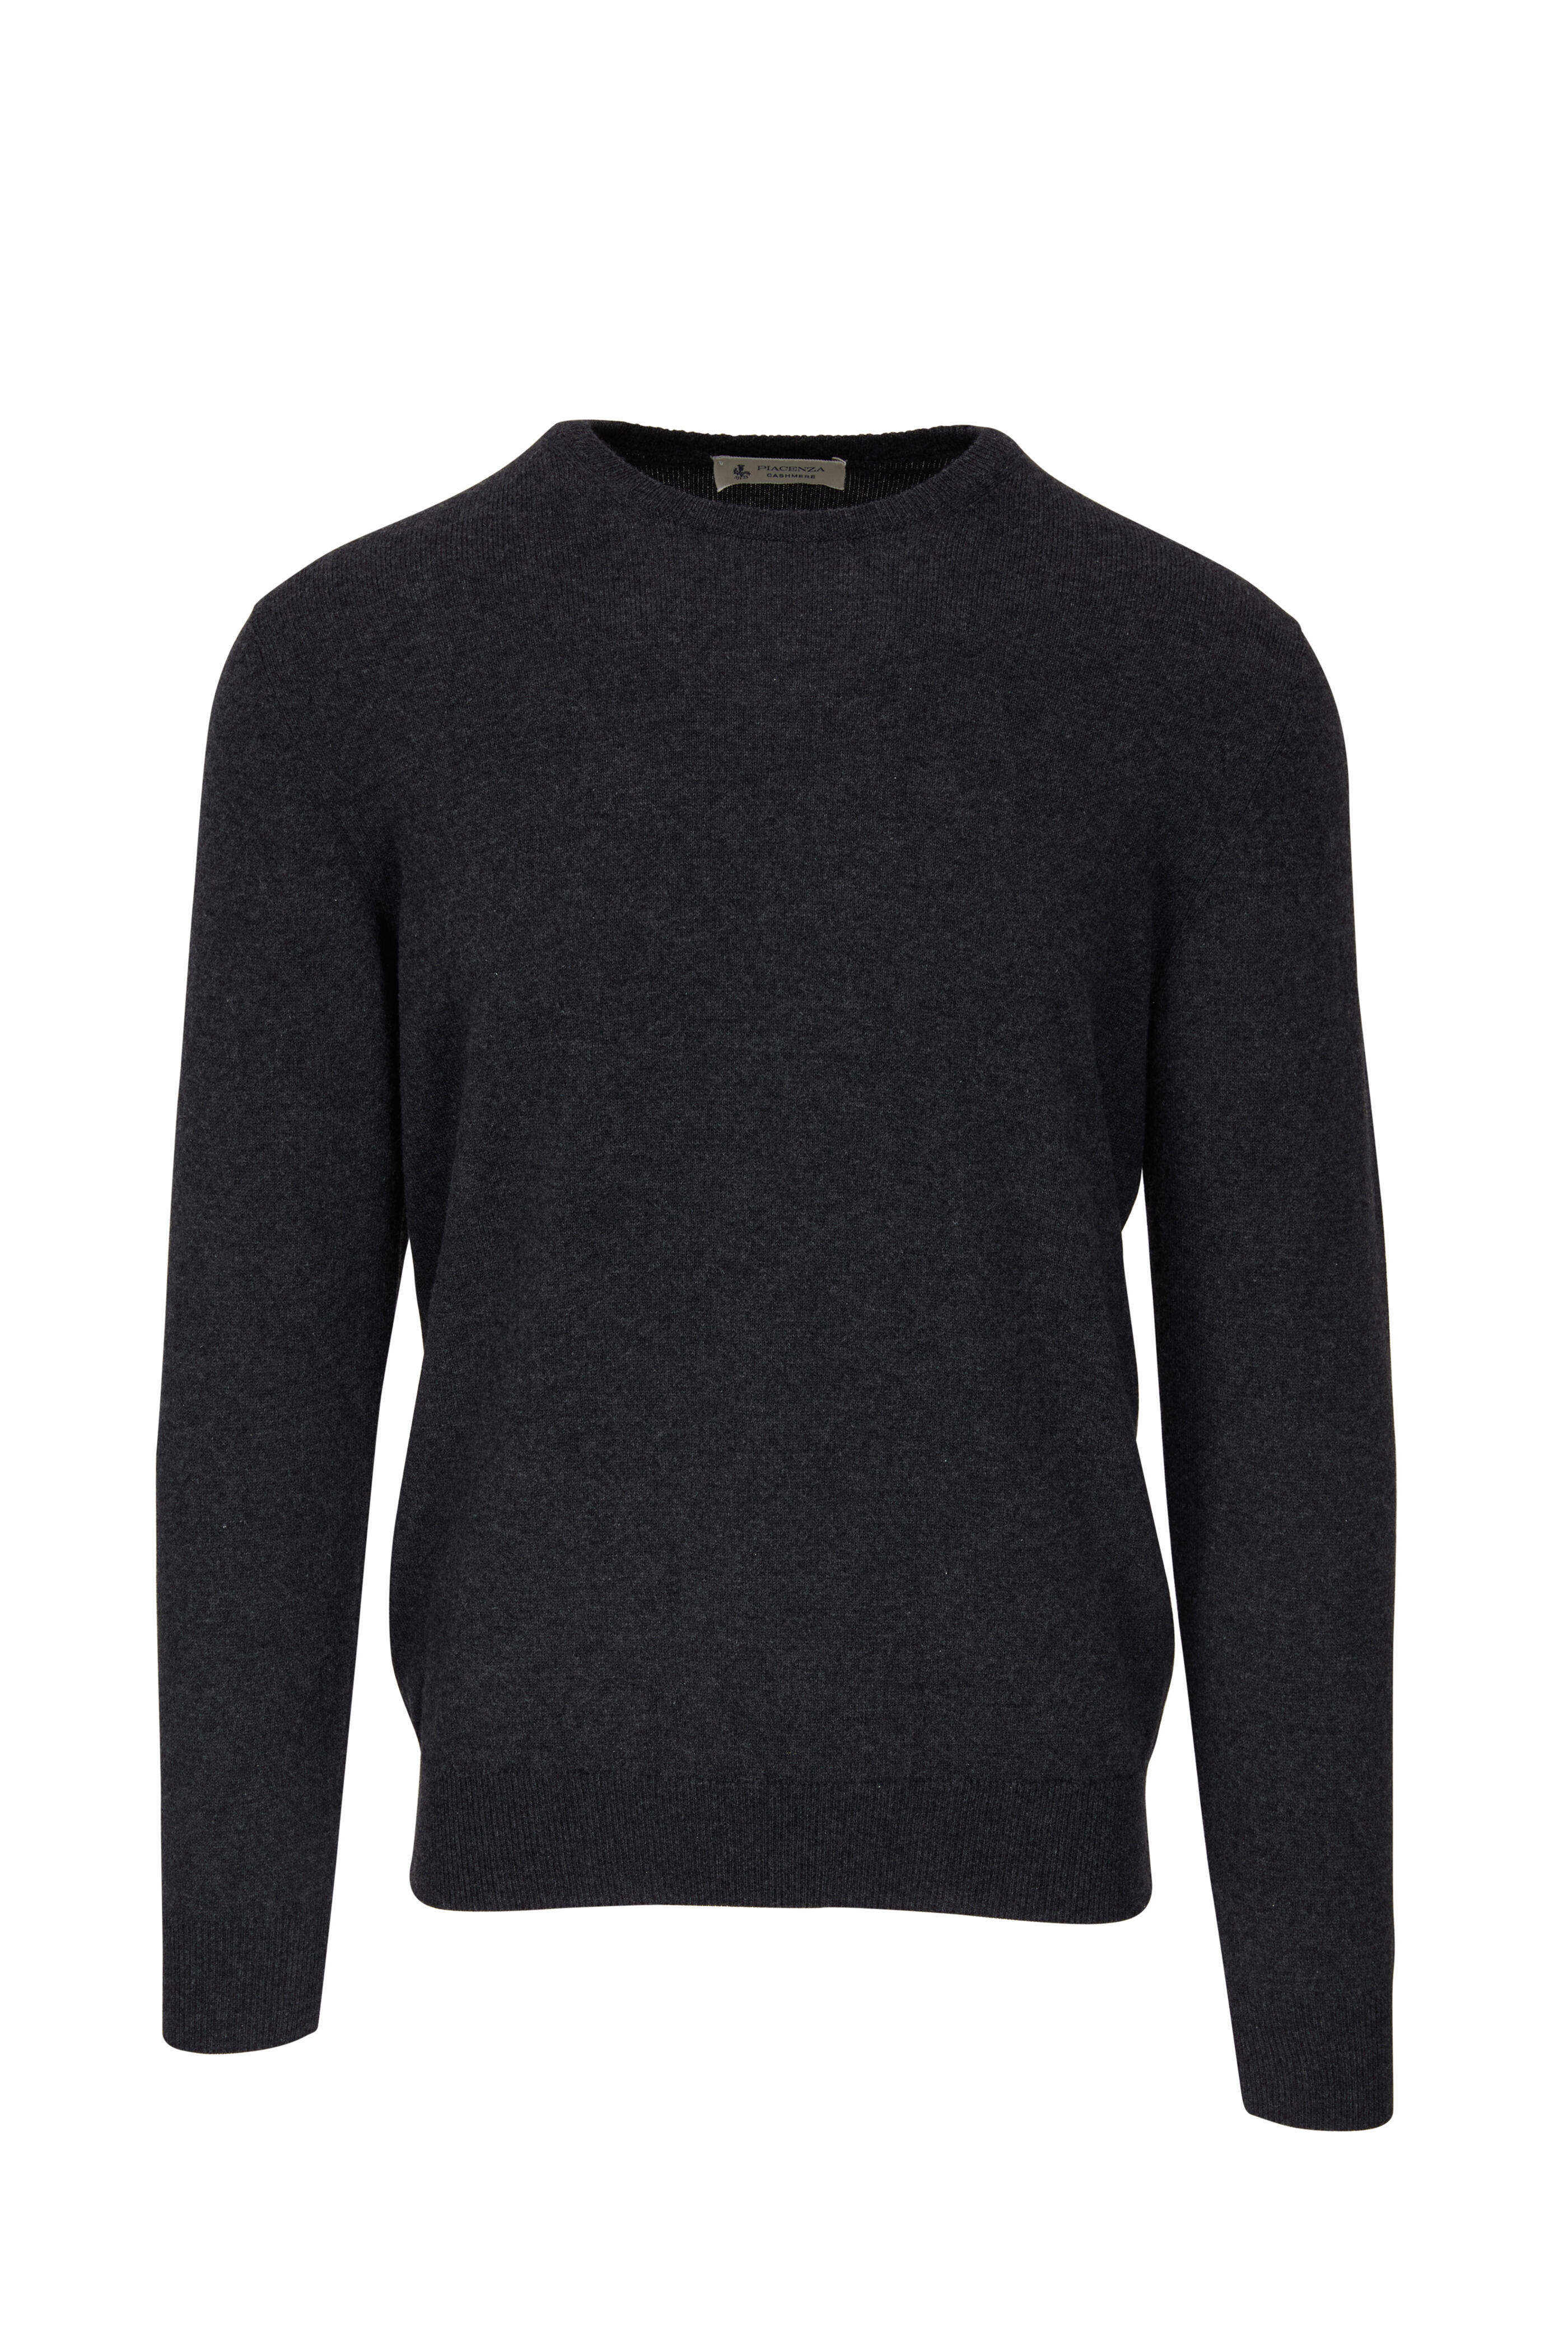 Fratelli Piacenza - Charcoal Cashmere Crewneck Sweater